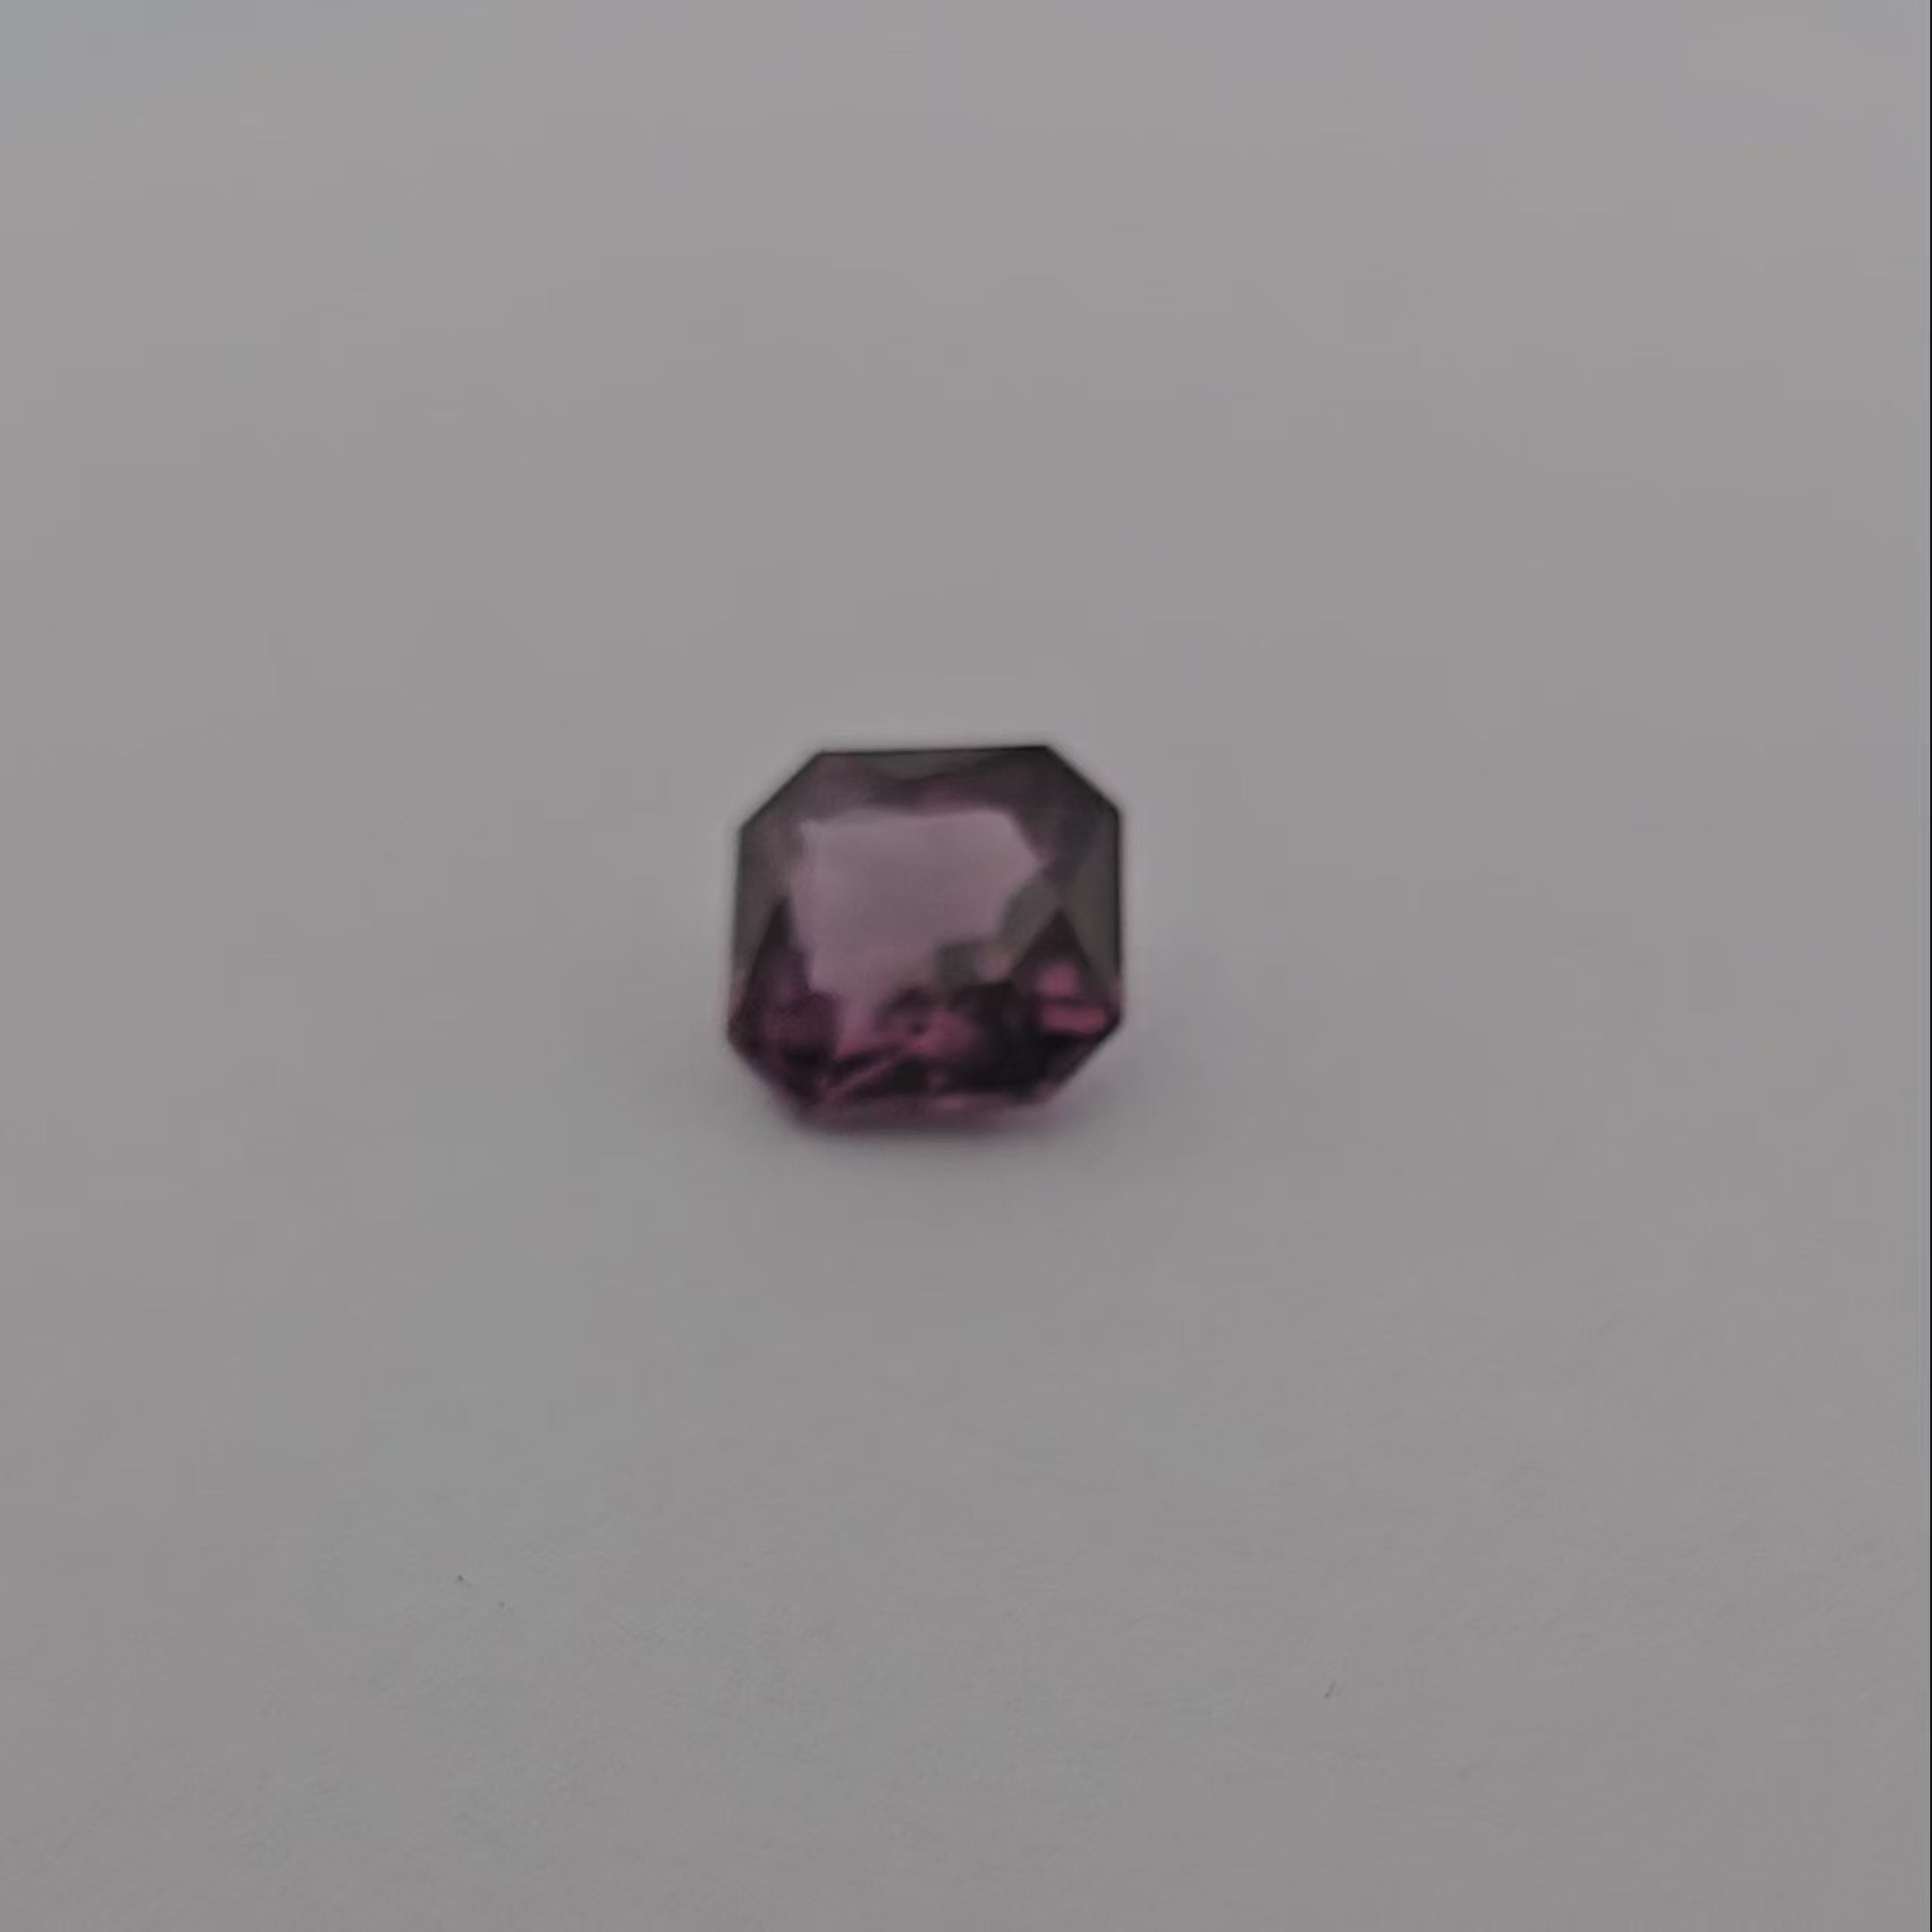 loose Natural Pink Spinel Stone 1.90 Carats Asscher Cut (7.1 mm)